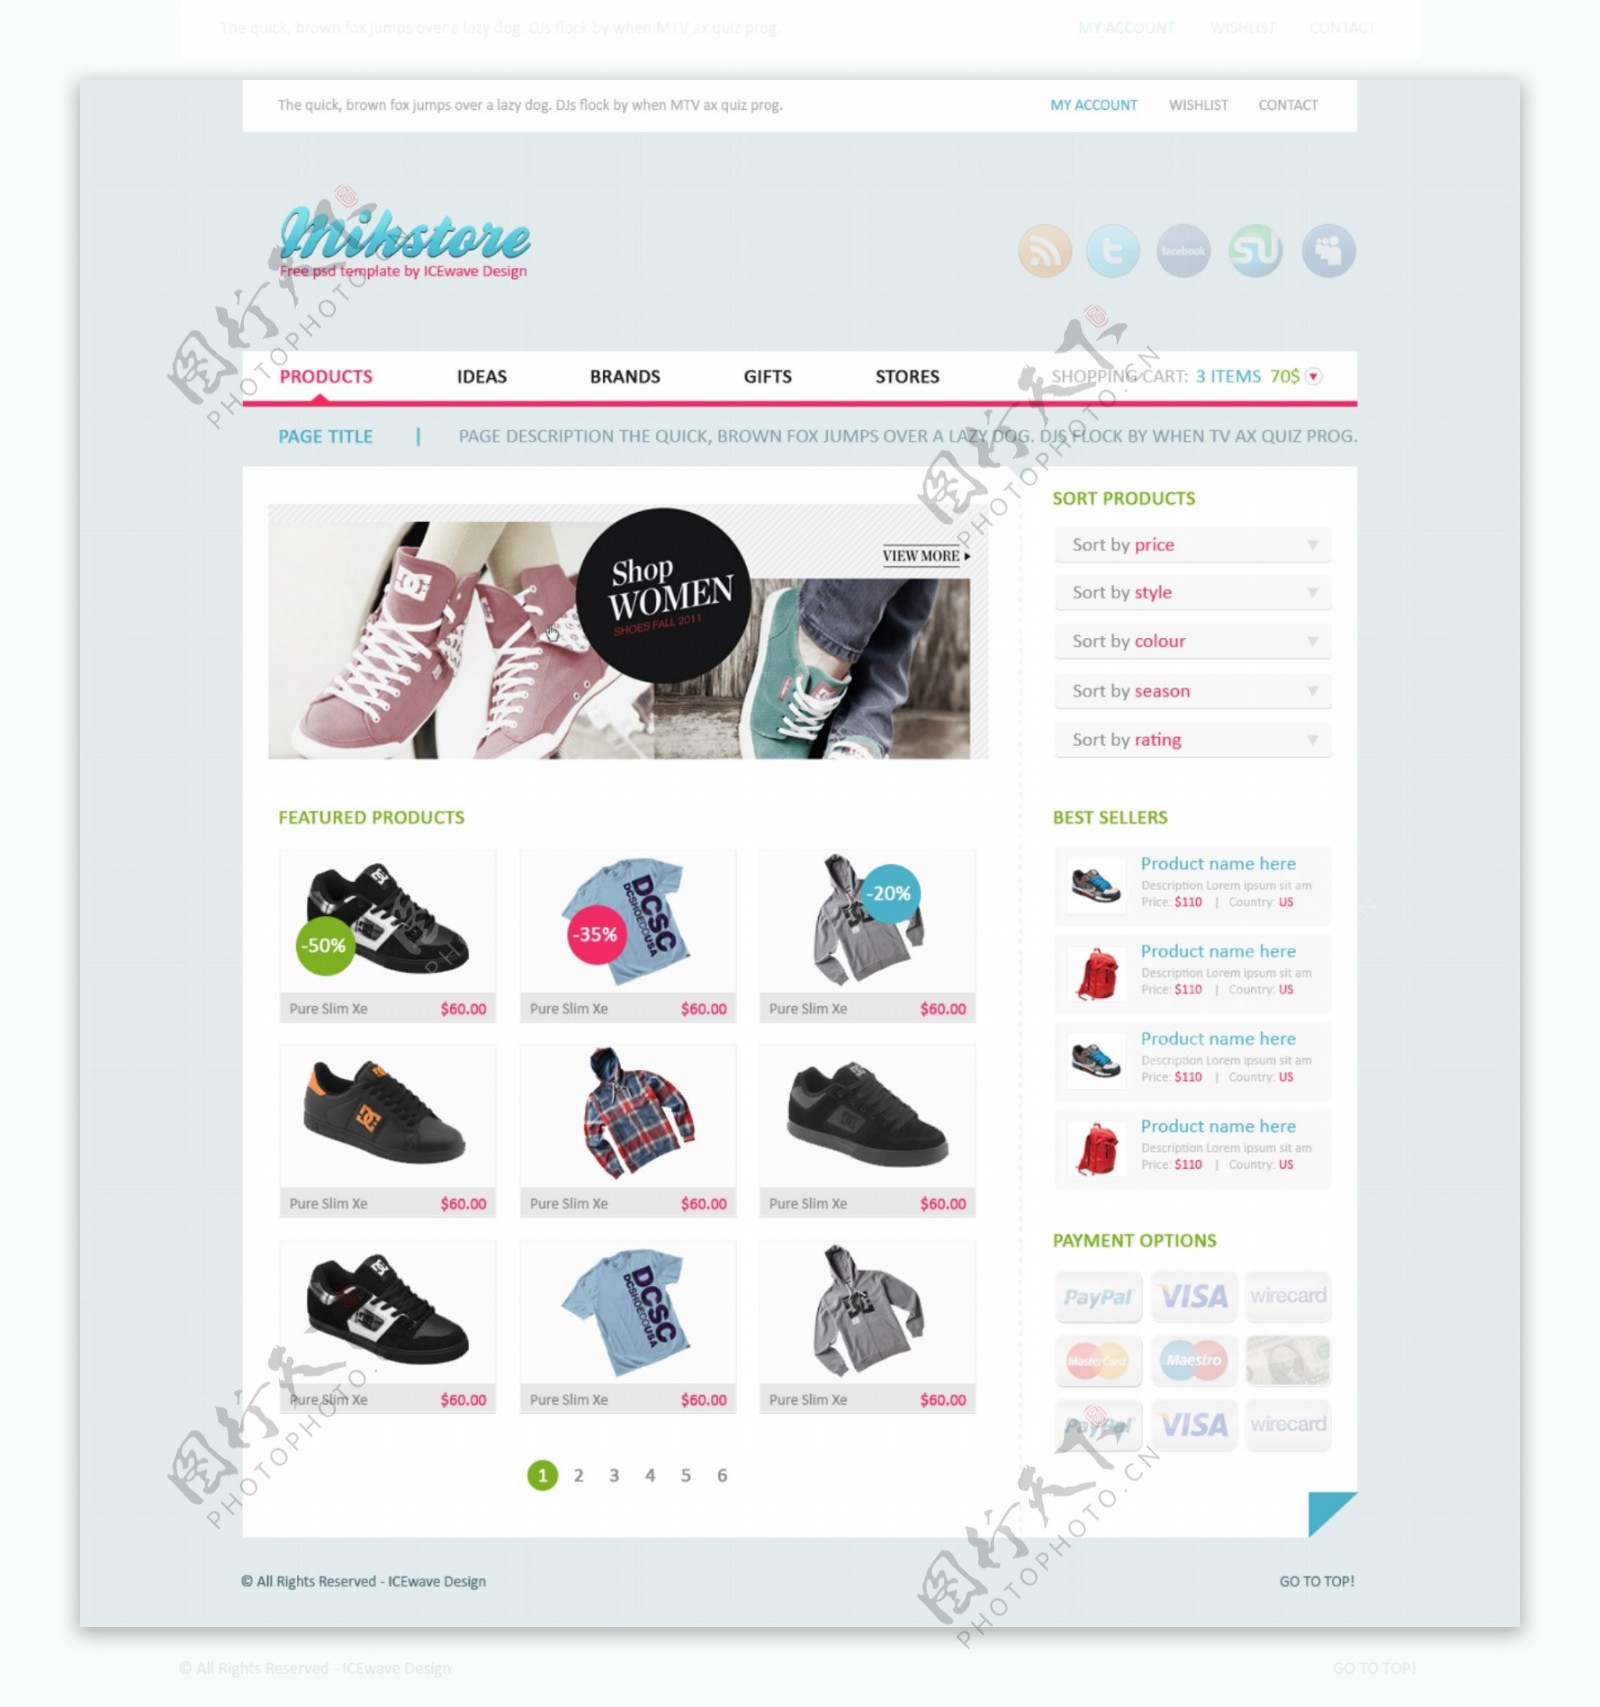 mihstore服装店网站模板PSD